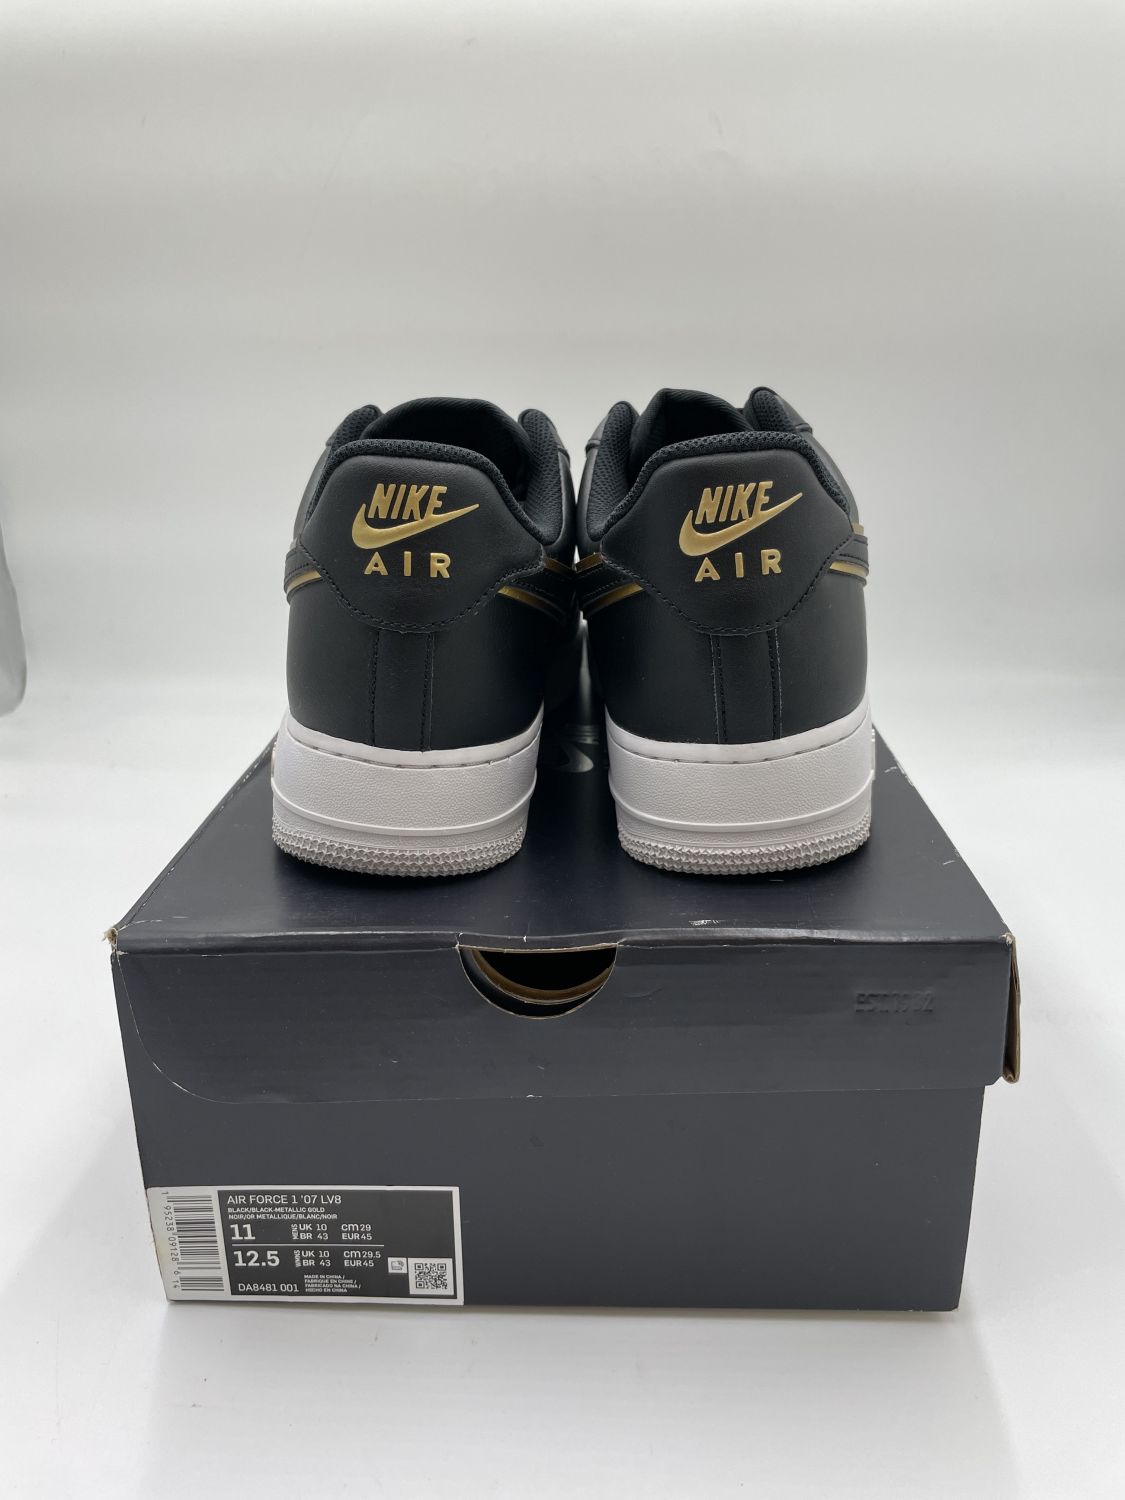 nike air force 1 lv8 black metallic gold sneakers da8481 001 men size